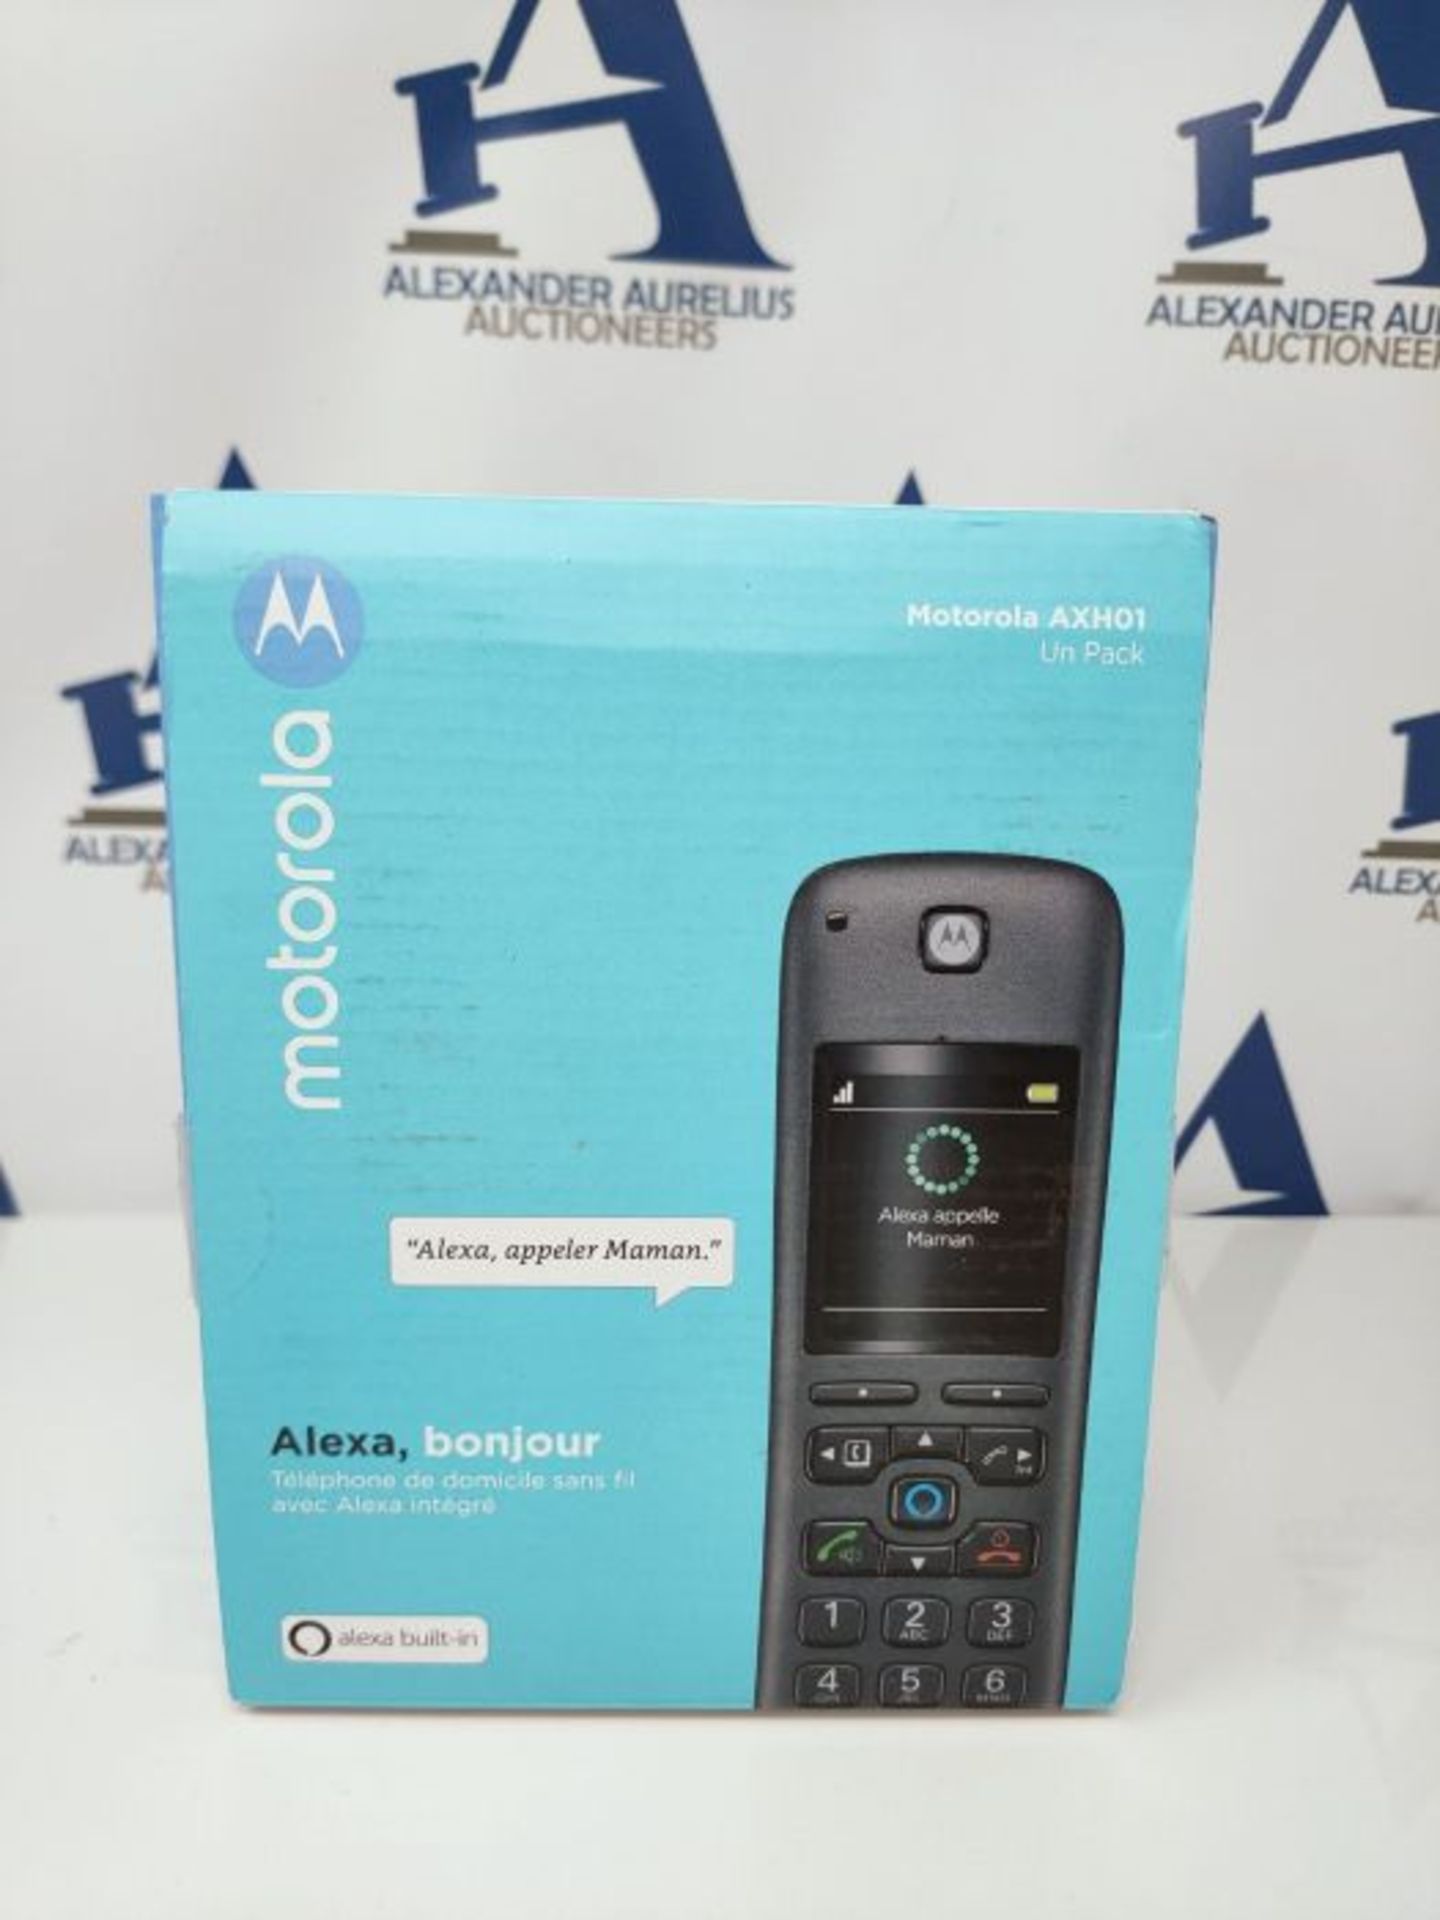 RRP £78.00 TELEPHONE FIXE MOTOROLA DECT AXH01 PACK SIMPLE ALEXA - Image 4 of 9